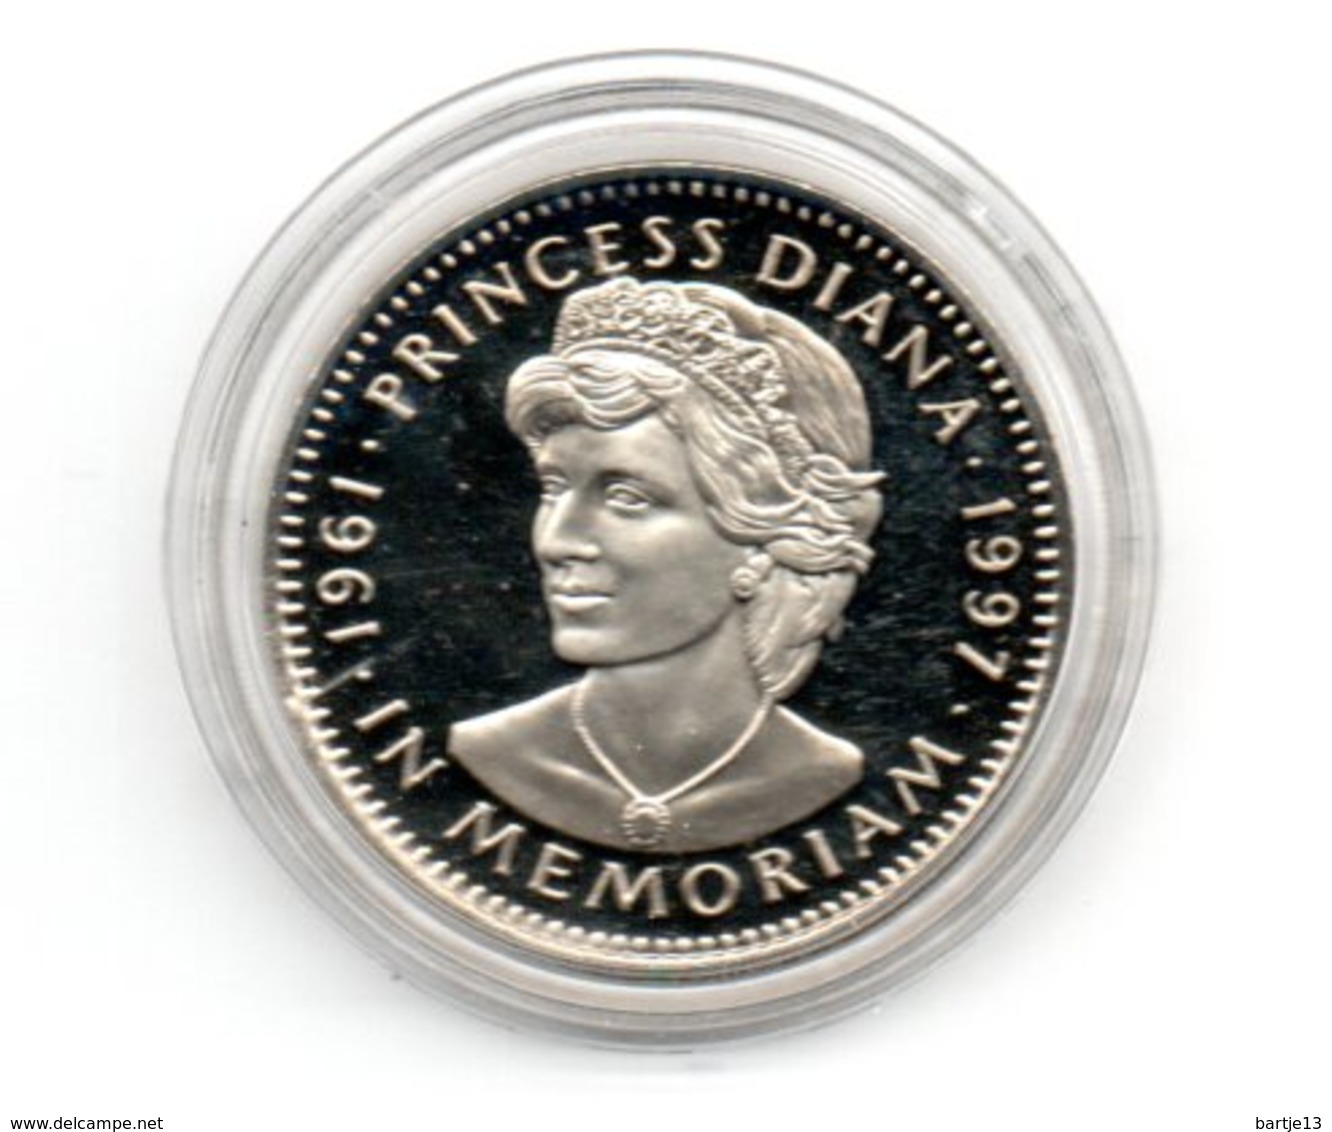 LIBERIA 5 DOLLARS 1997 CN PROOF DIANA IN MEMORIAM DAMAGE ONLY ON CAPSEL - Liberia